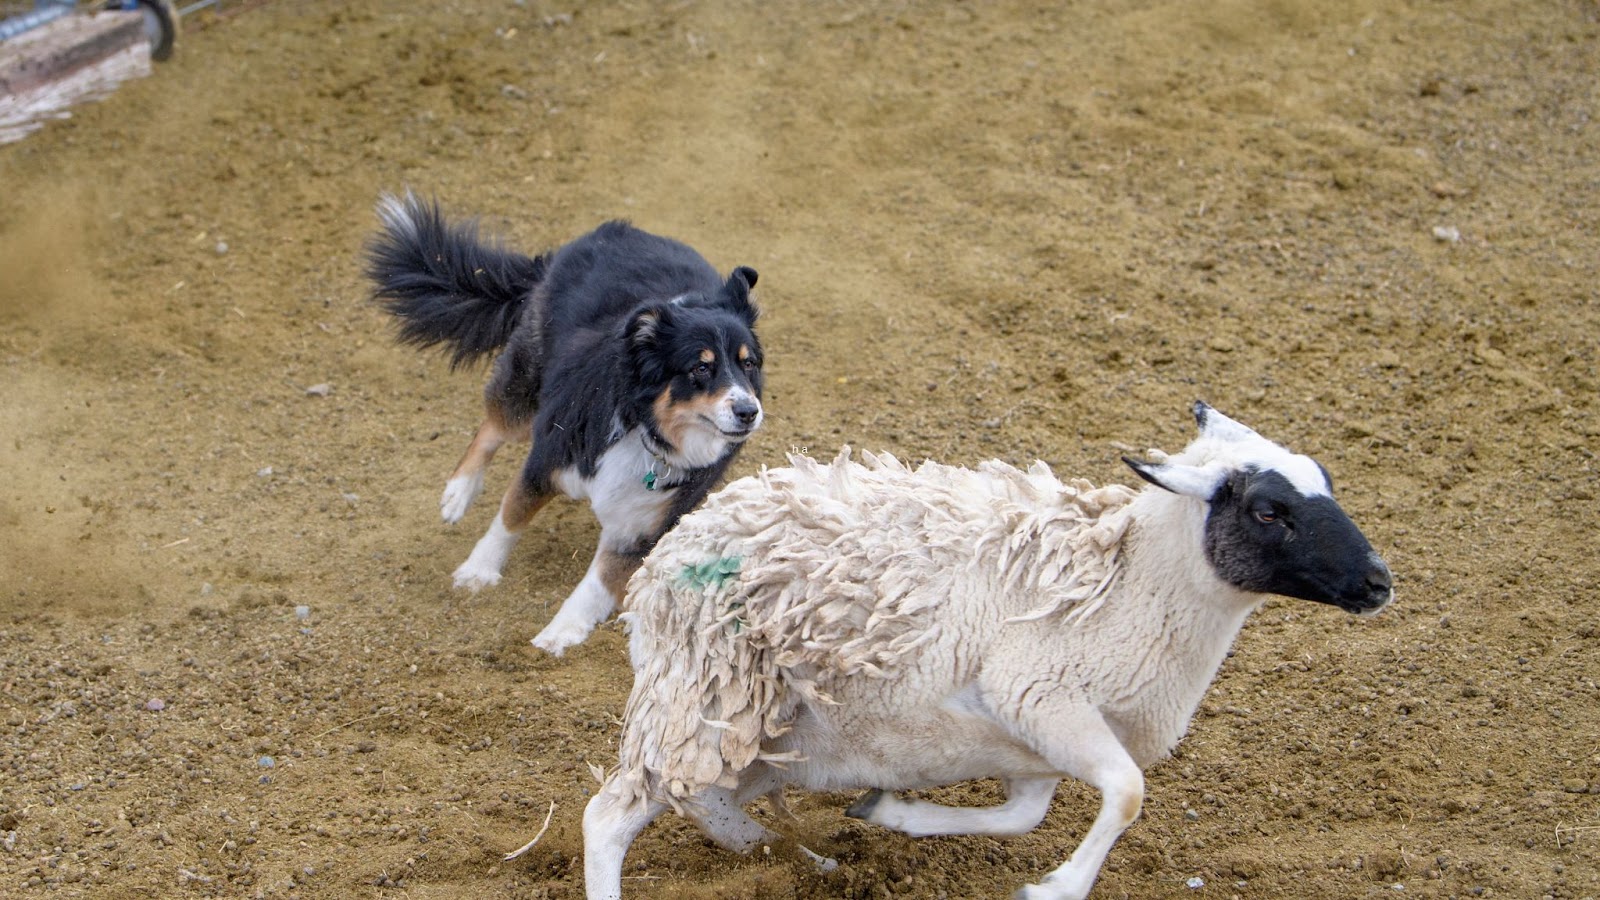 Black and tan Australian shepherd dog showing natural behahavior herding sheep